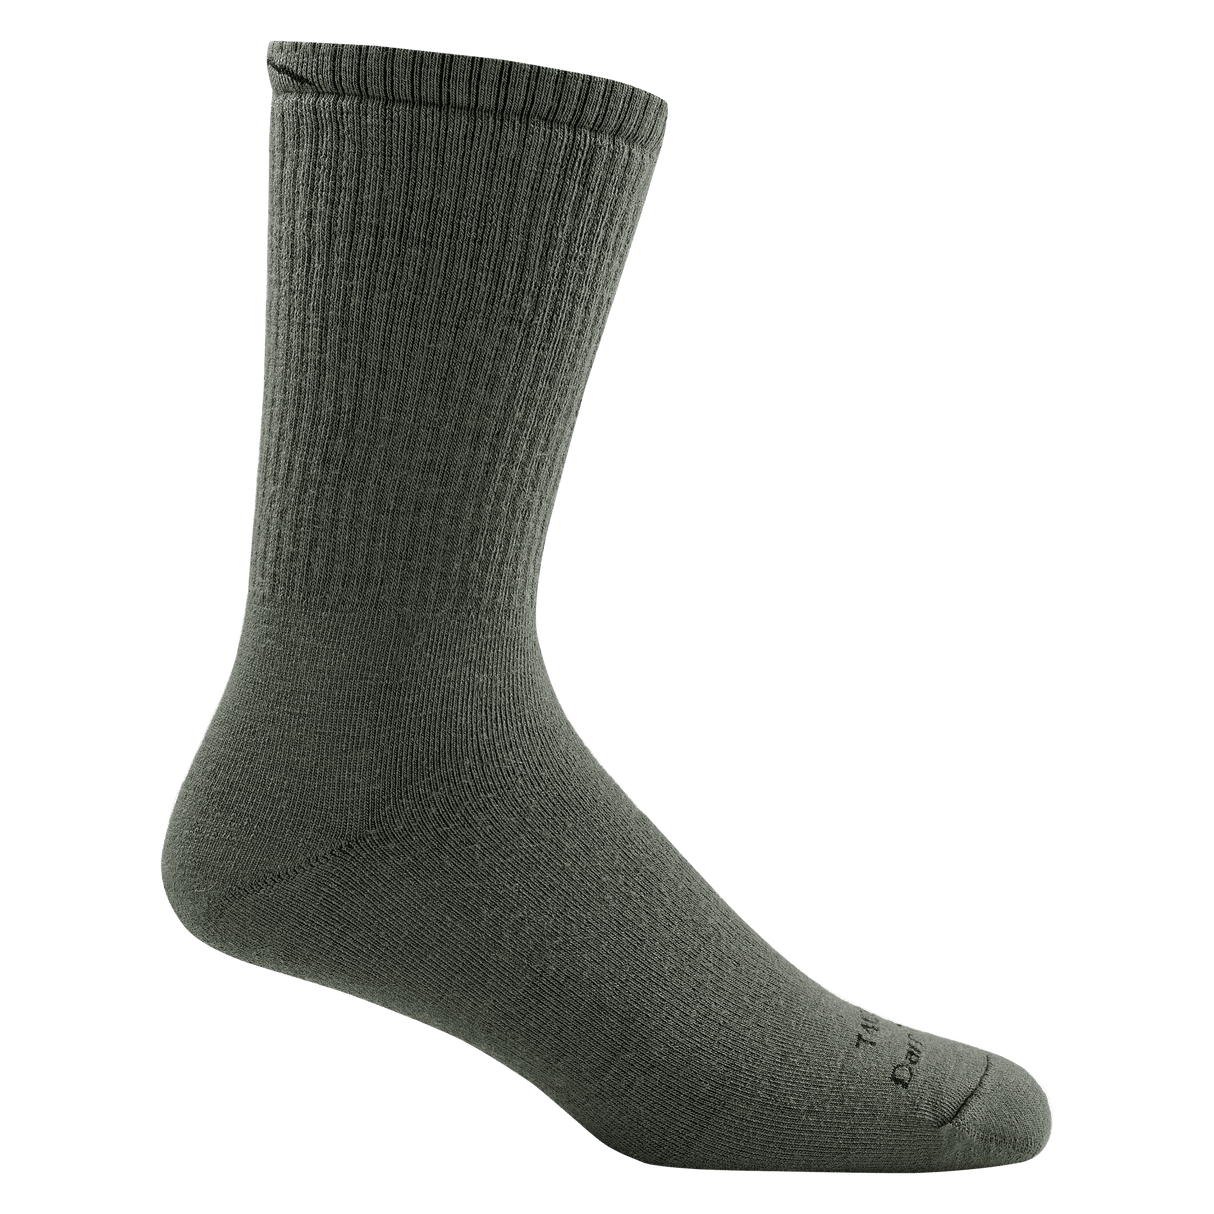 Darn Tough Boot Heavyweight Tactical Socks with Full Cushion  -  X-Small / Foliage Green